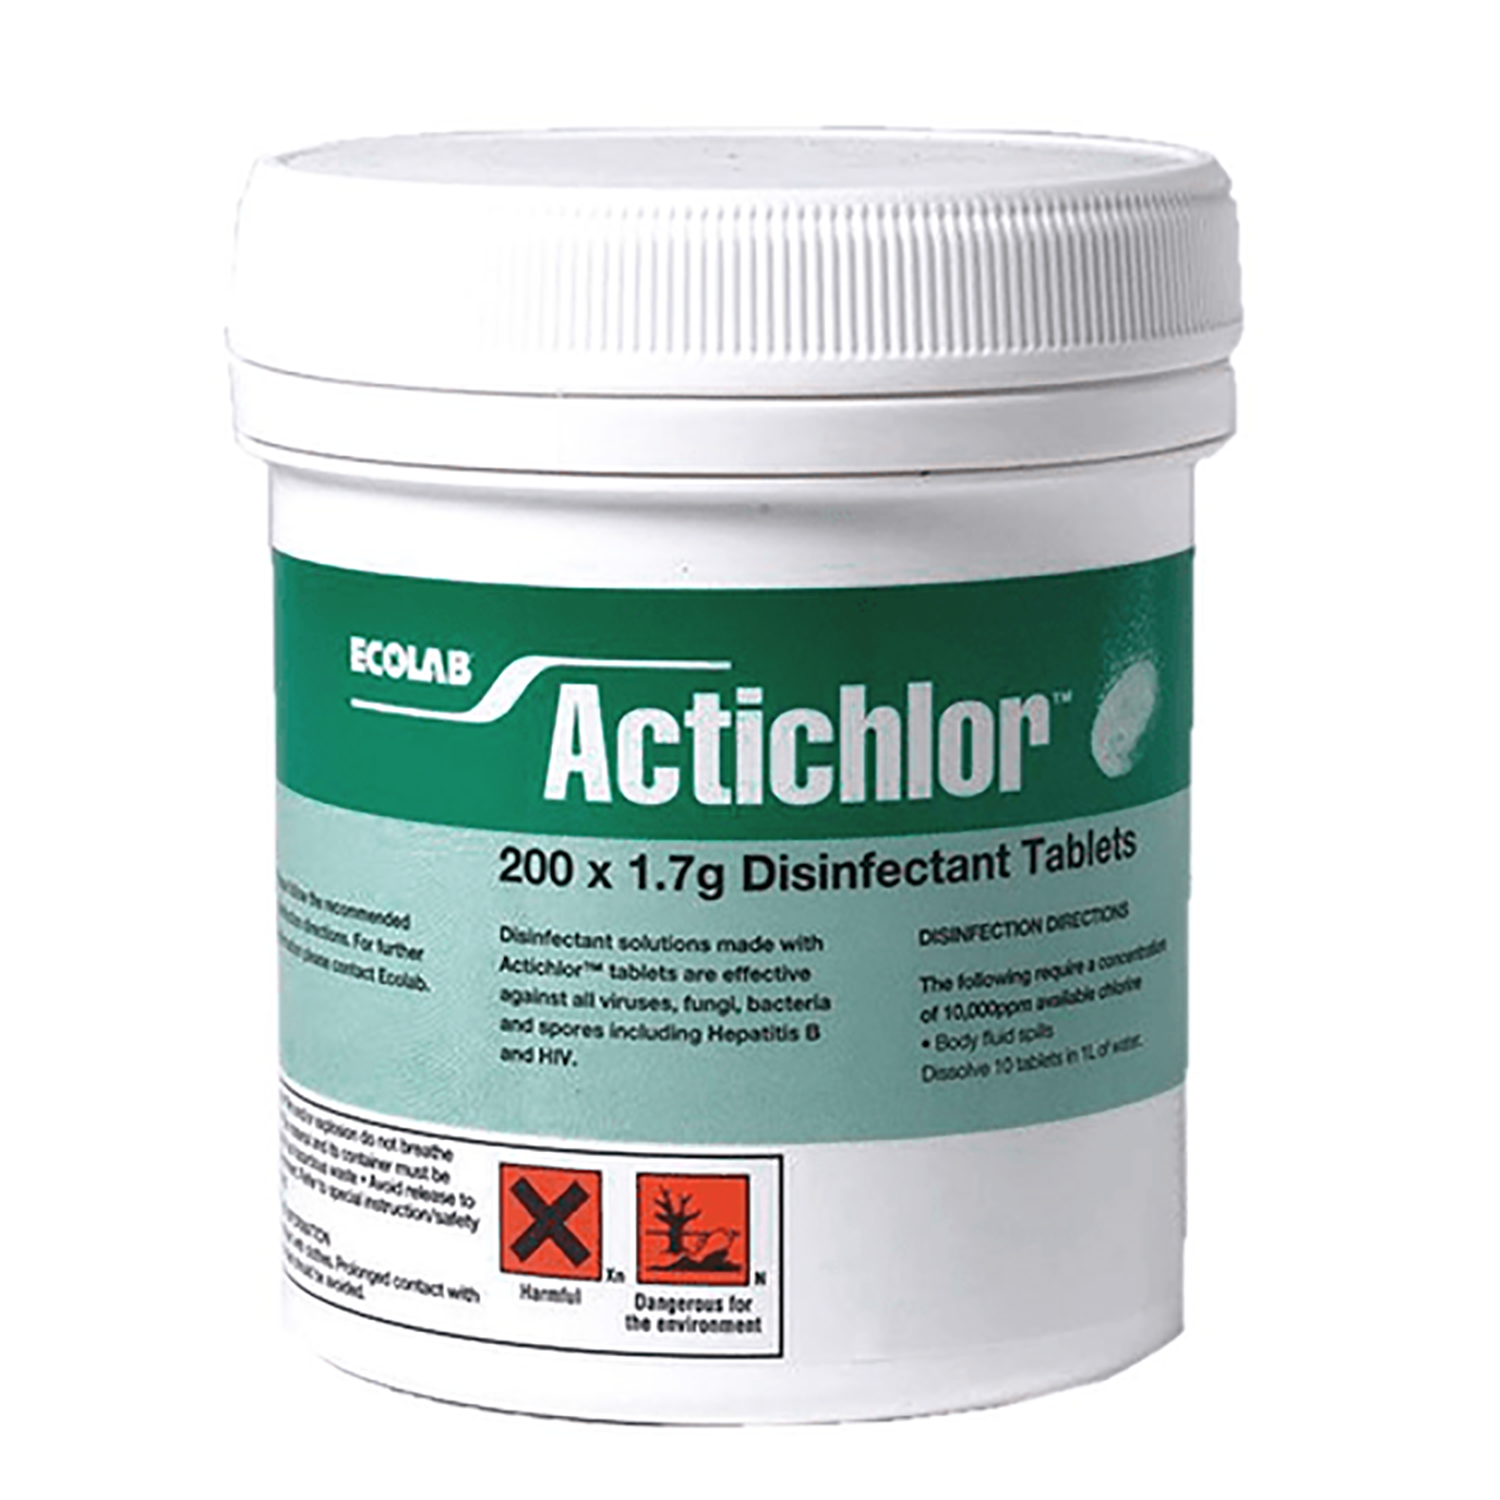 Actichlor Plus Tablets | Pack of 200